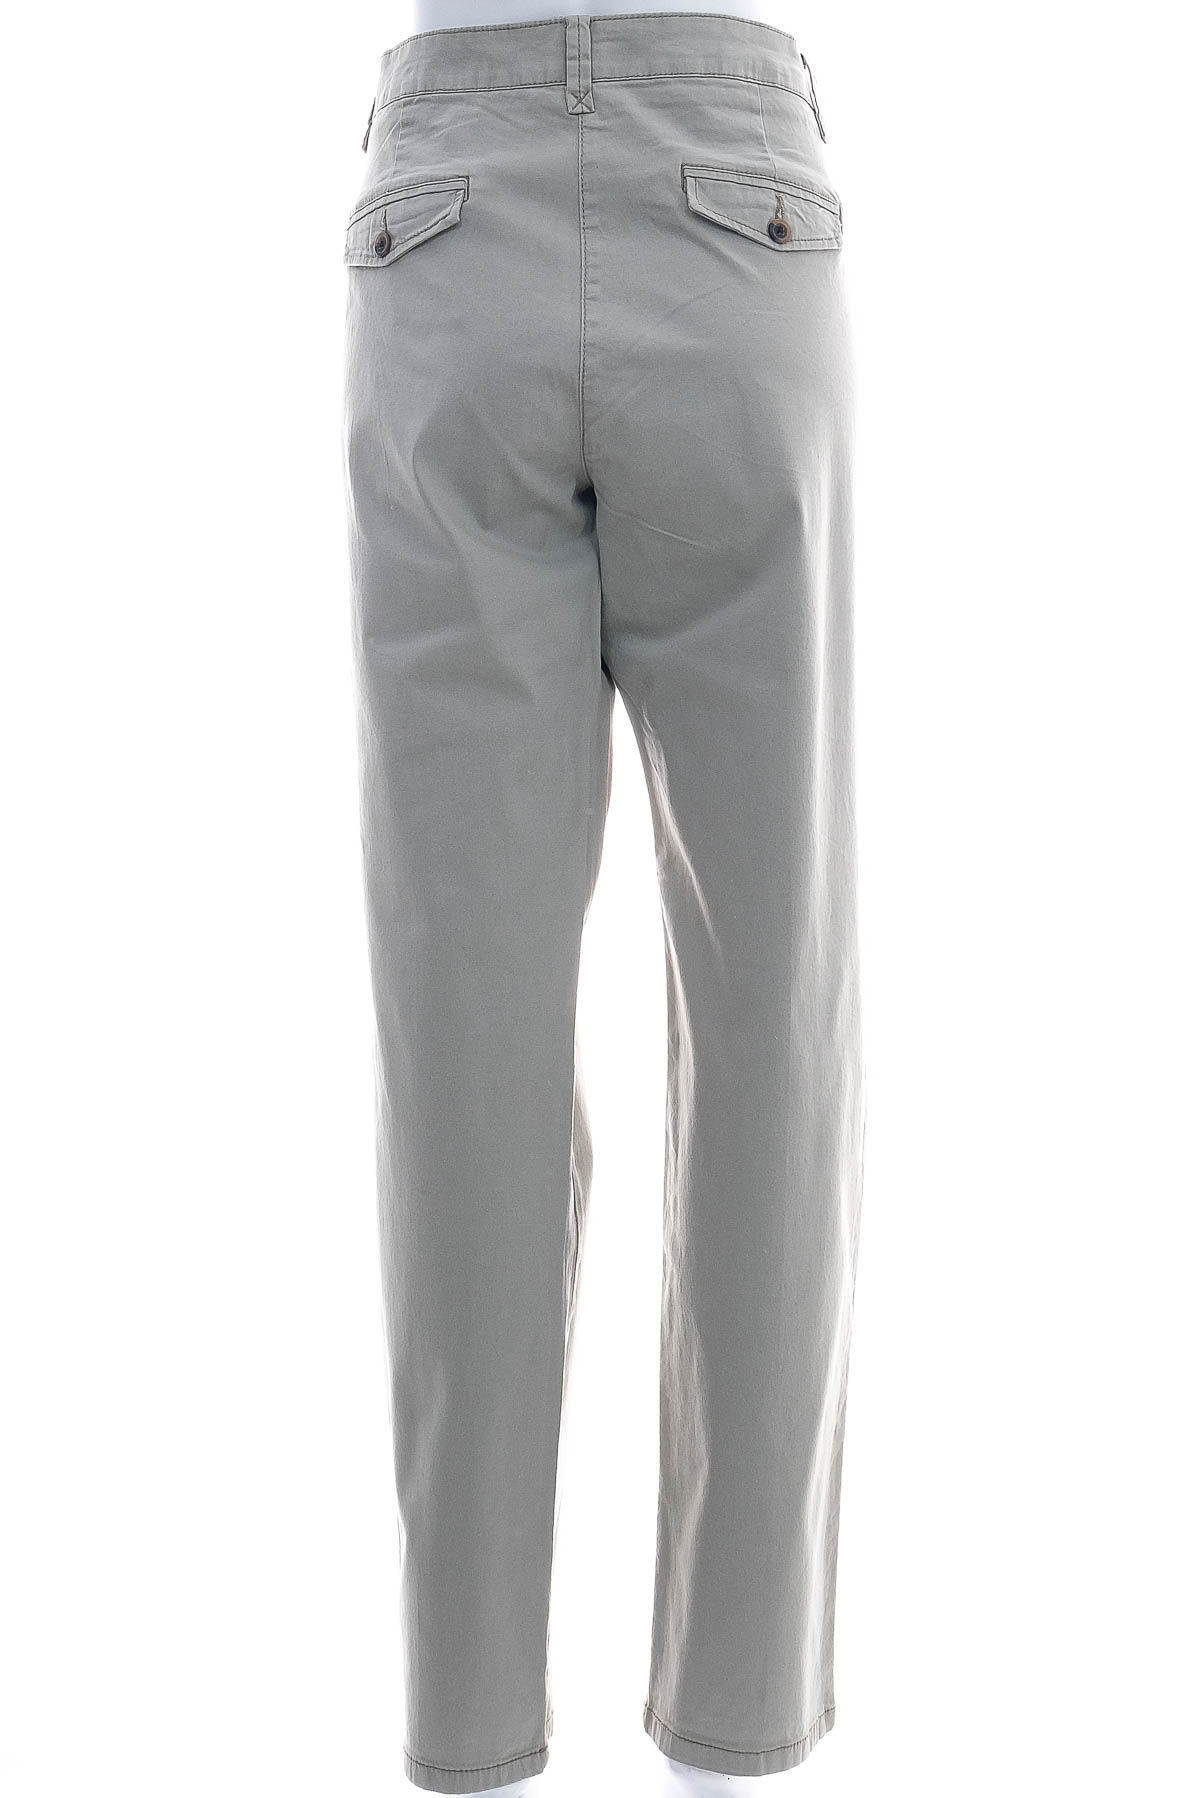 Pantaloni de damă - TCM - 1